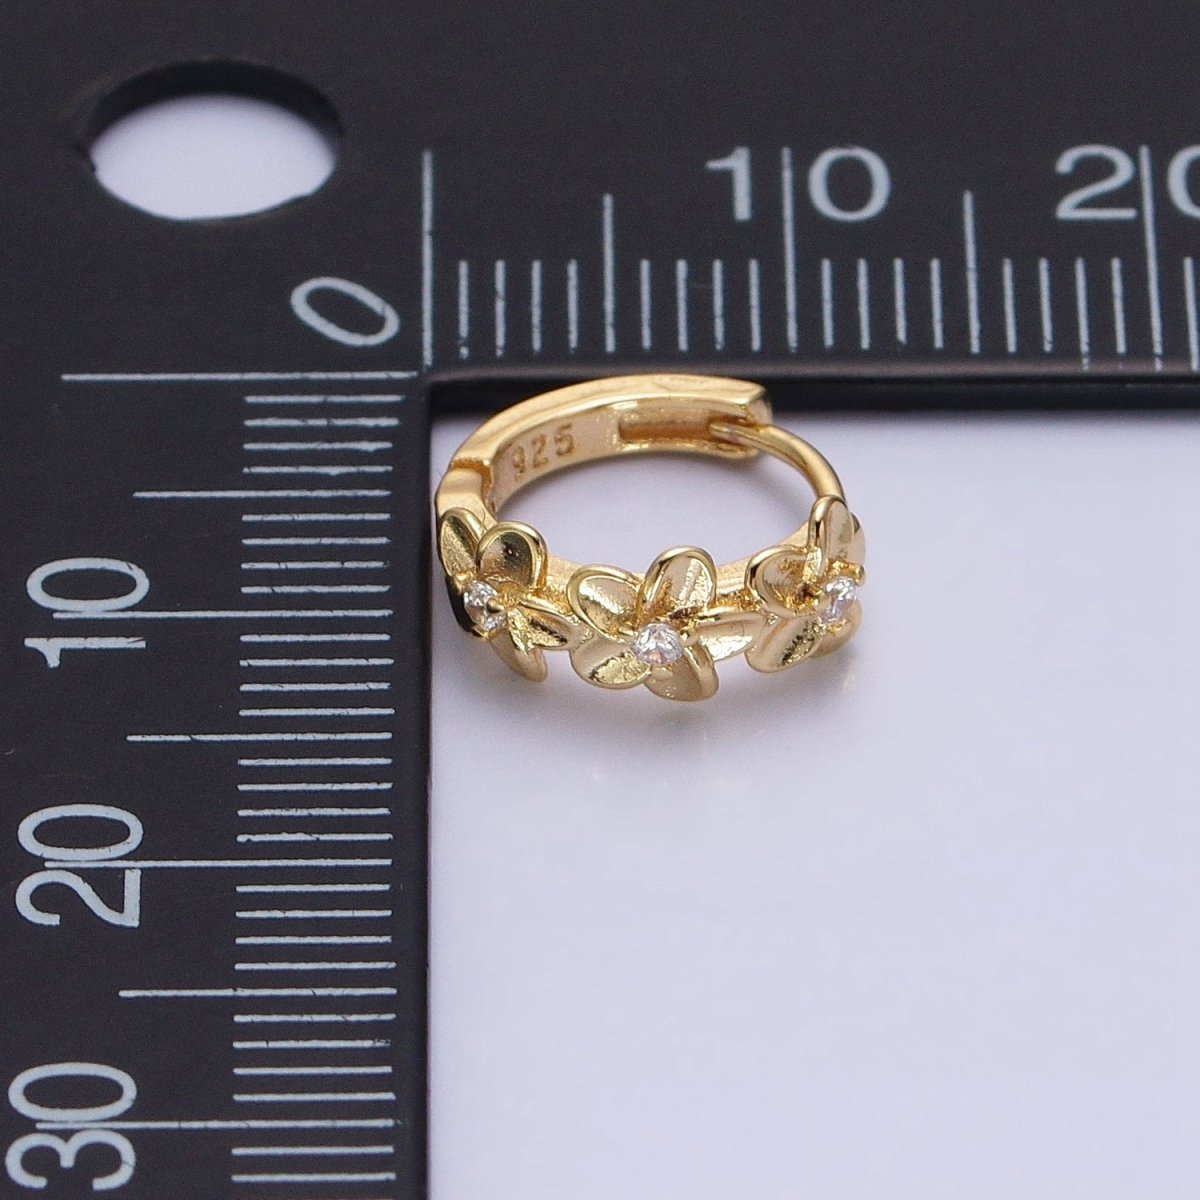 16K Gold Filled Triple Flower CZ Lined 12mm Huggie Earrings in Gold & Silver | AB1463 AB1464 - DLUXCA